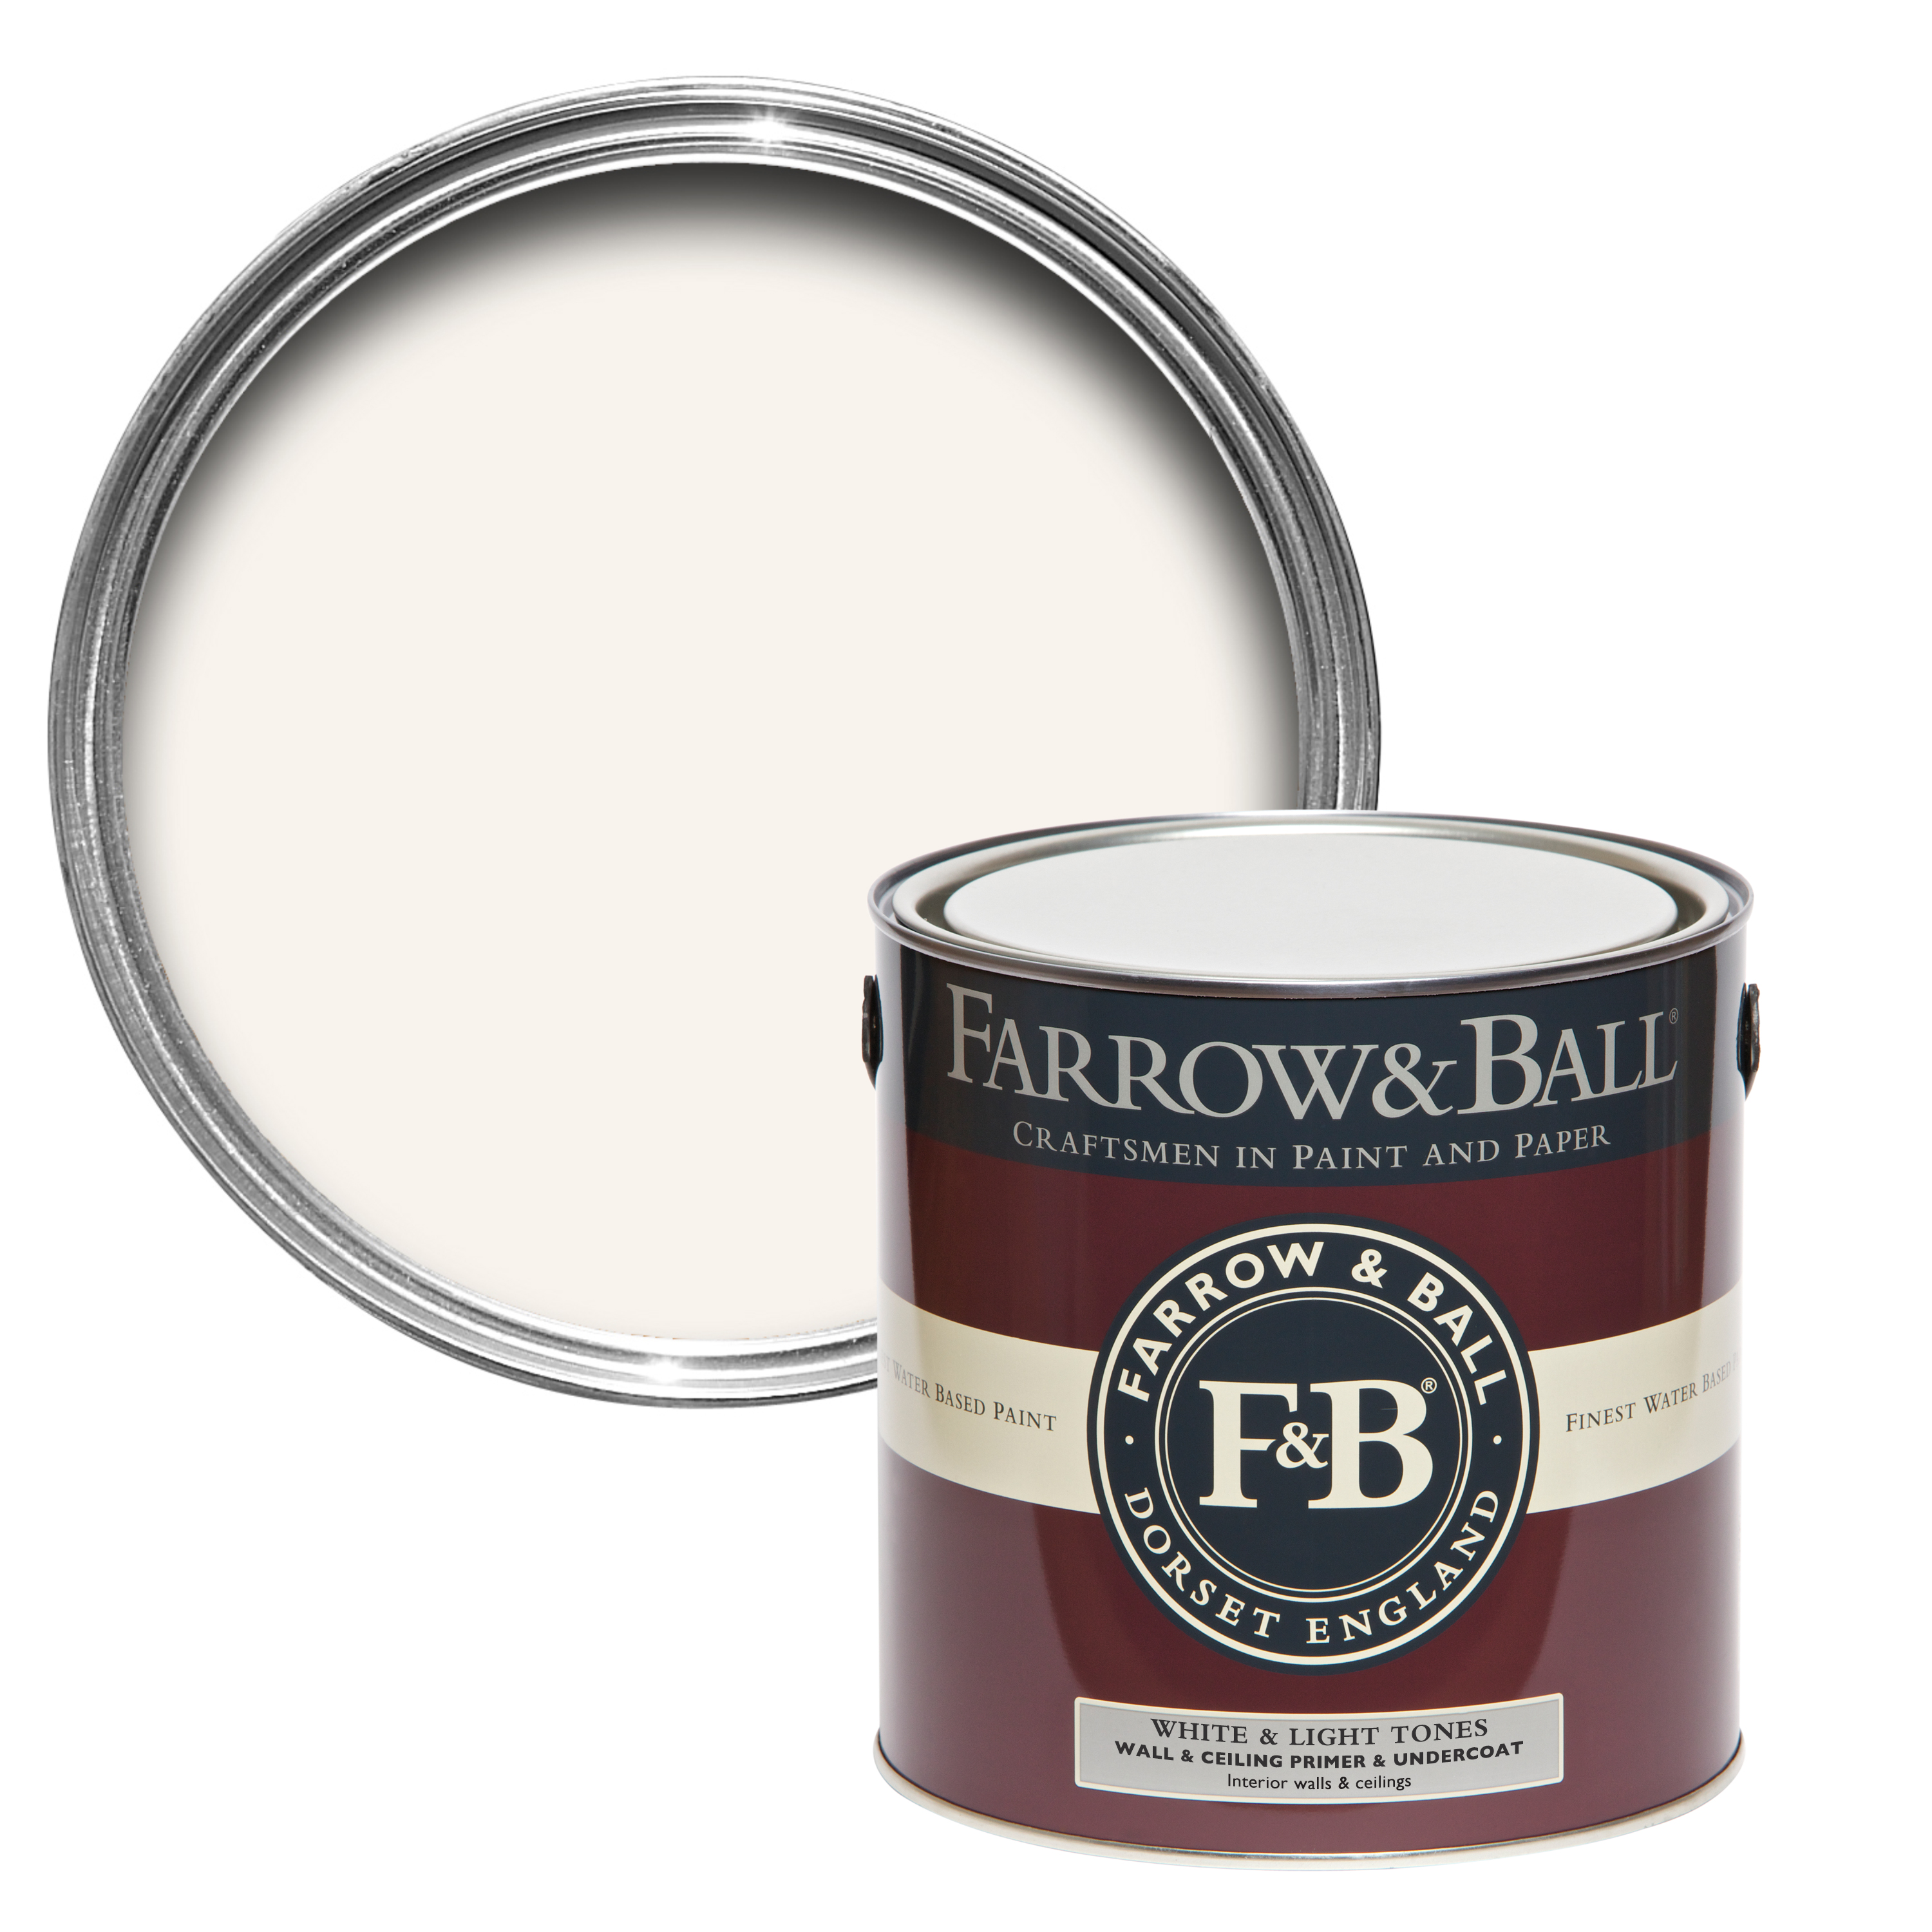 Farrow & Ball - Interior Wood Primer - White & Light Tones - 750ml